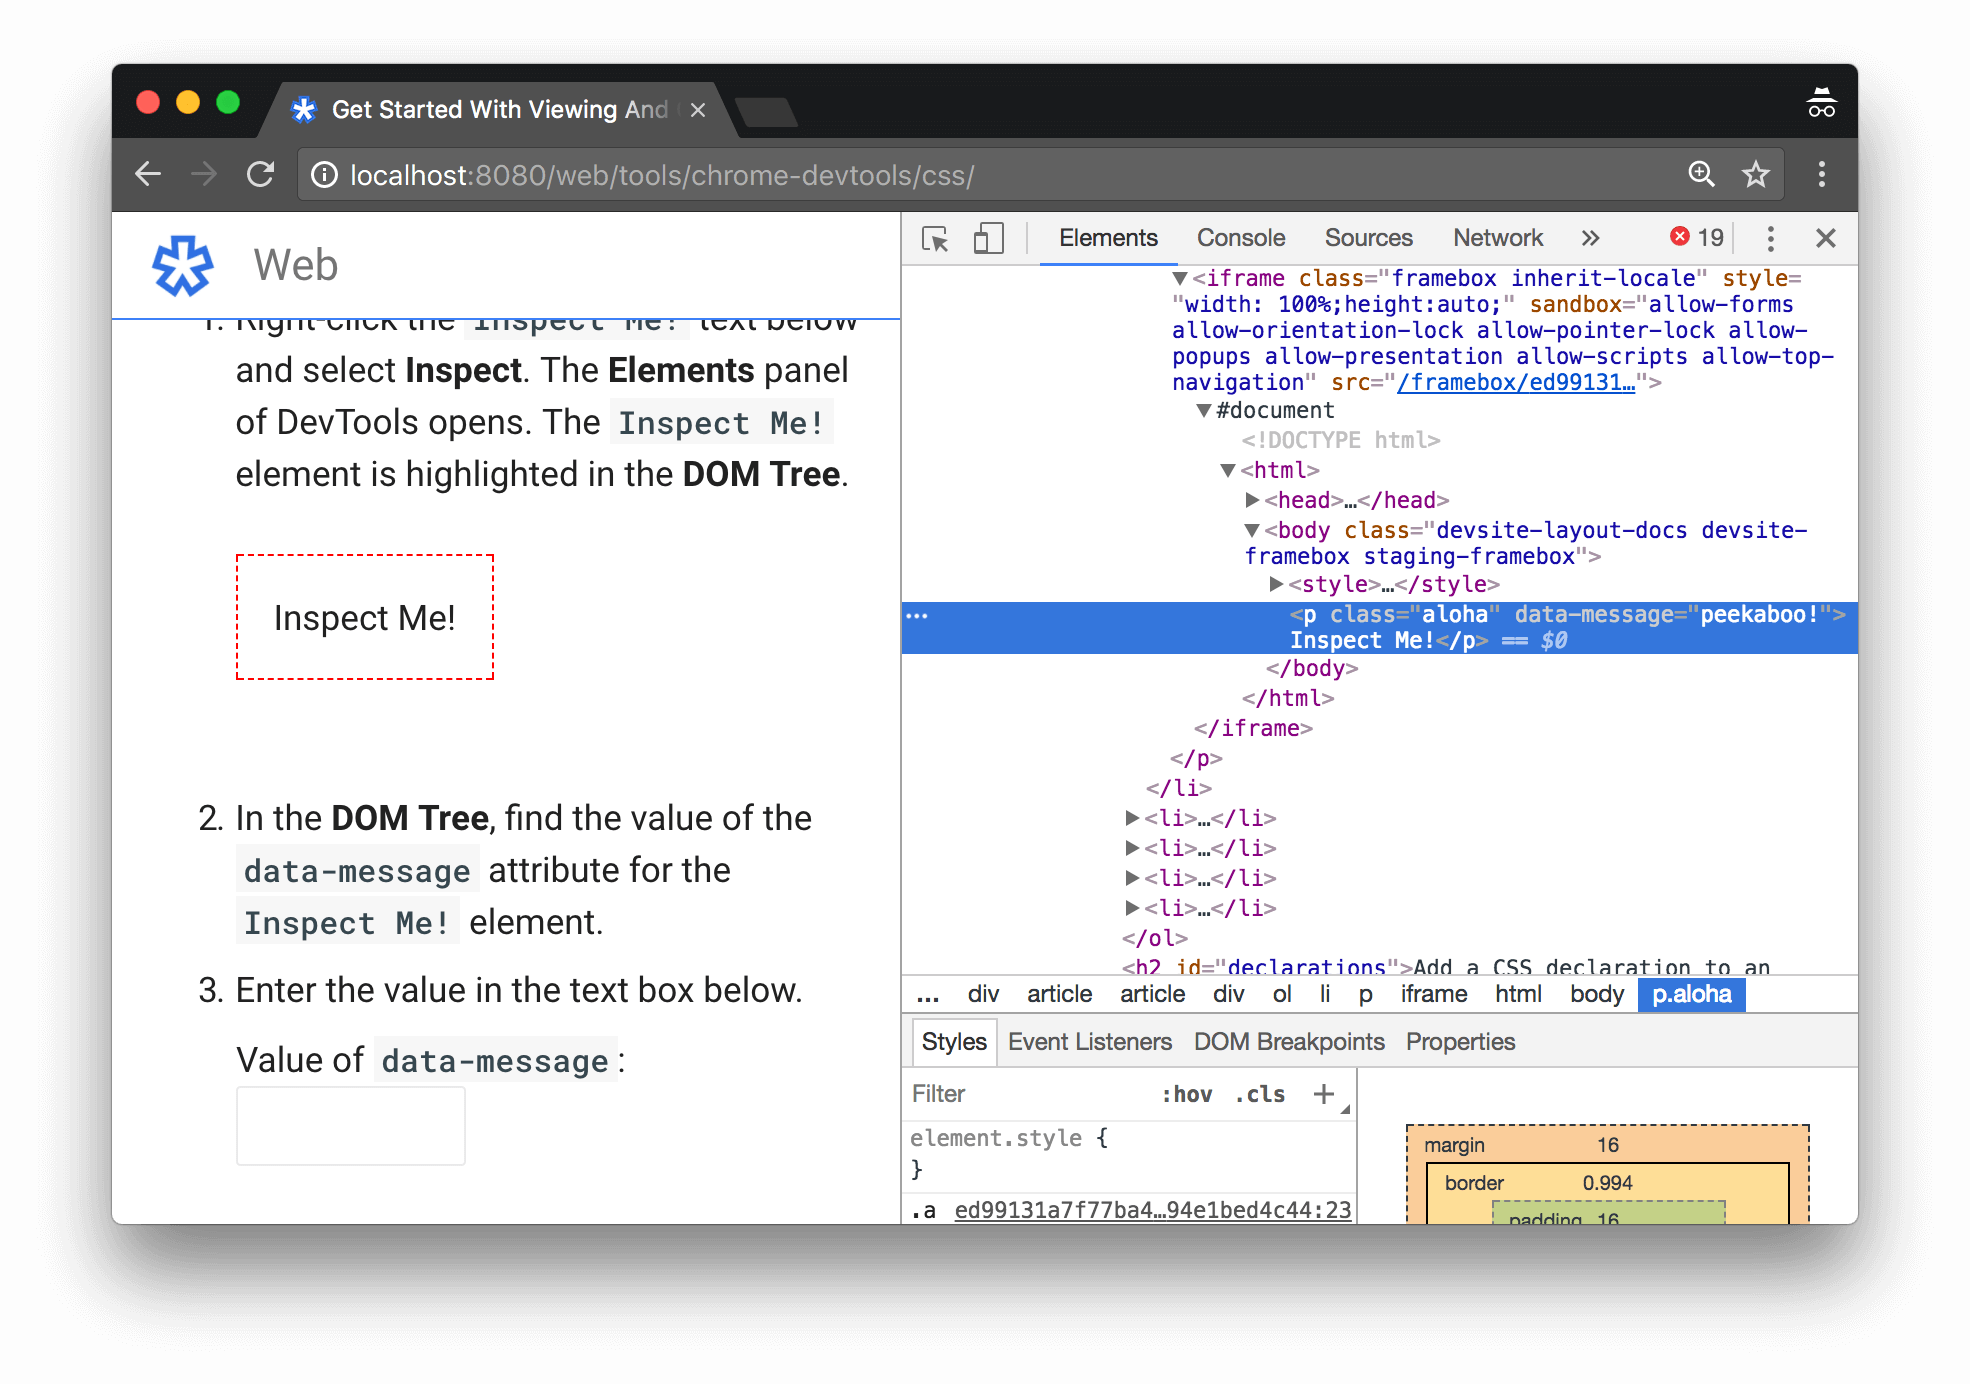 Sandbox allow scripts